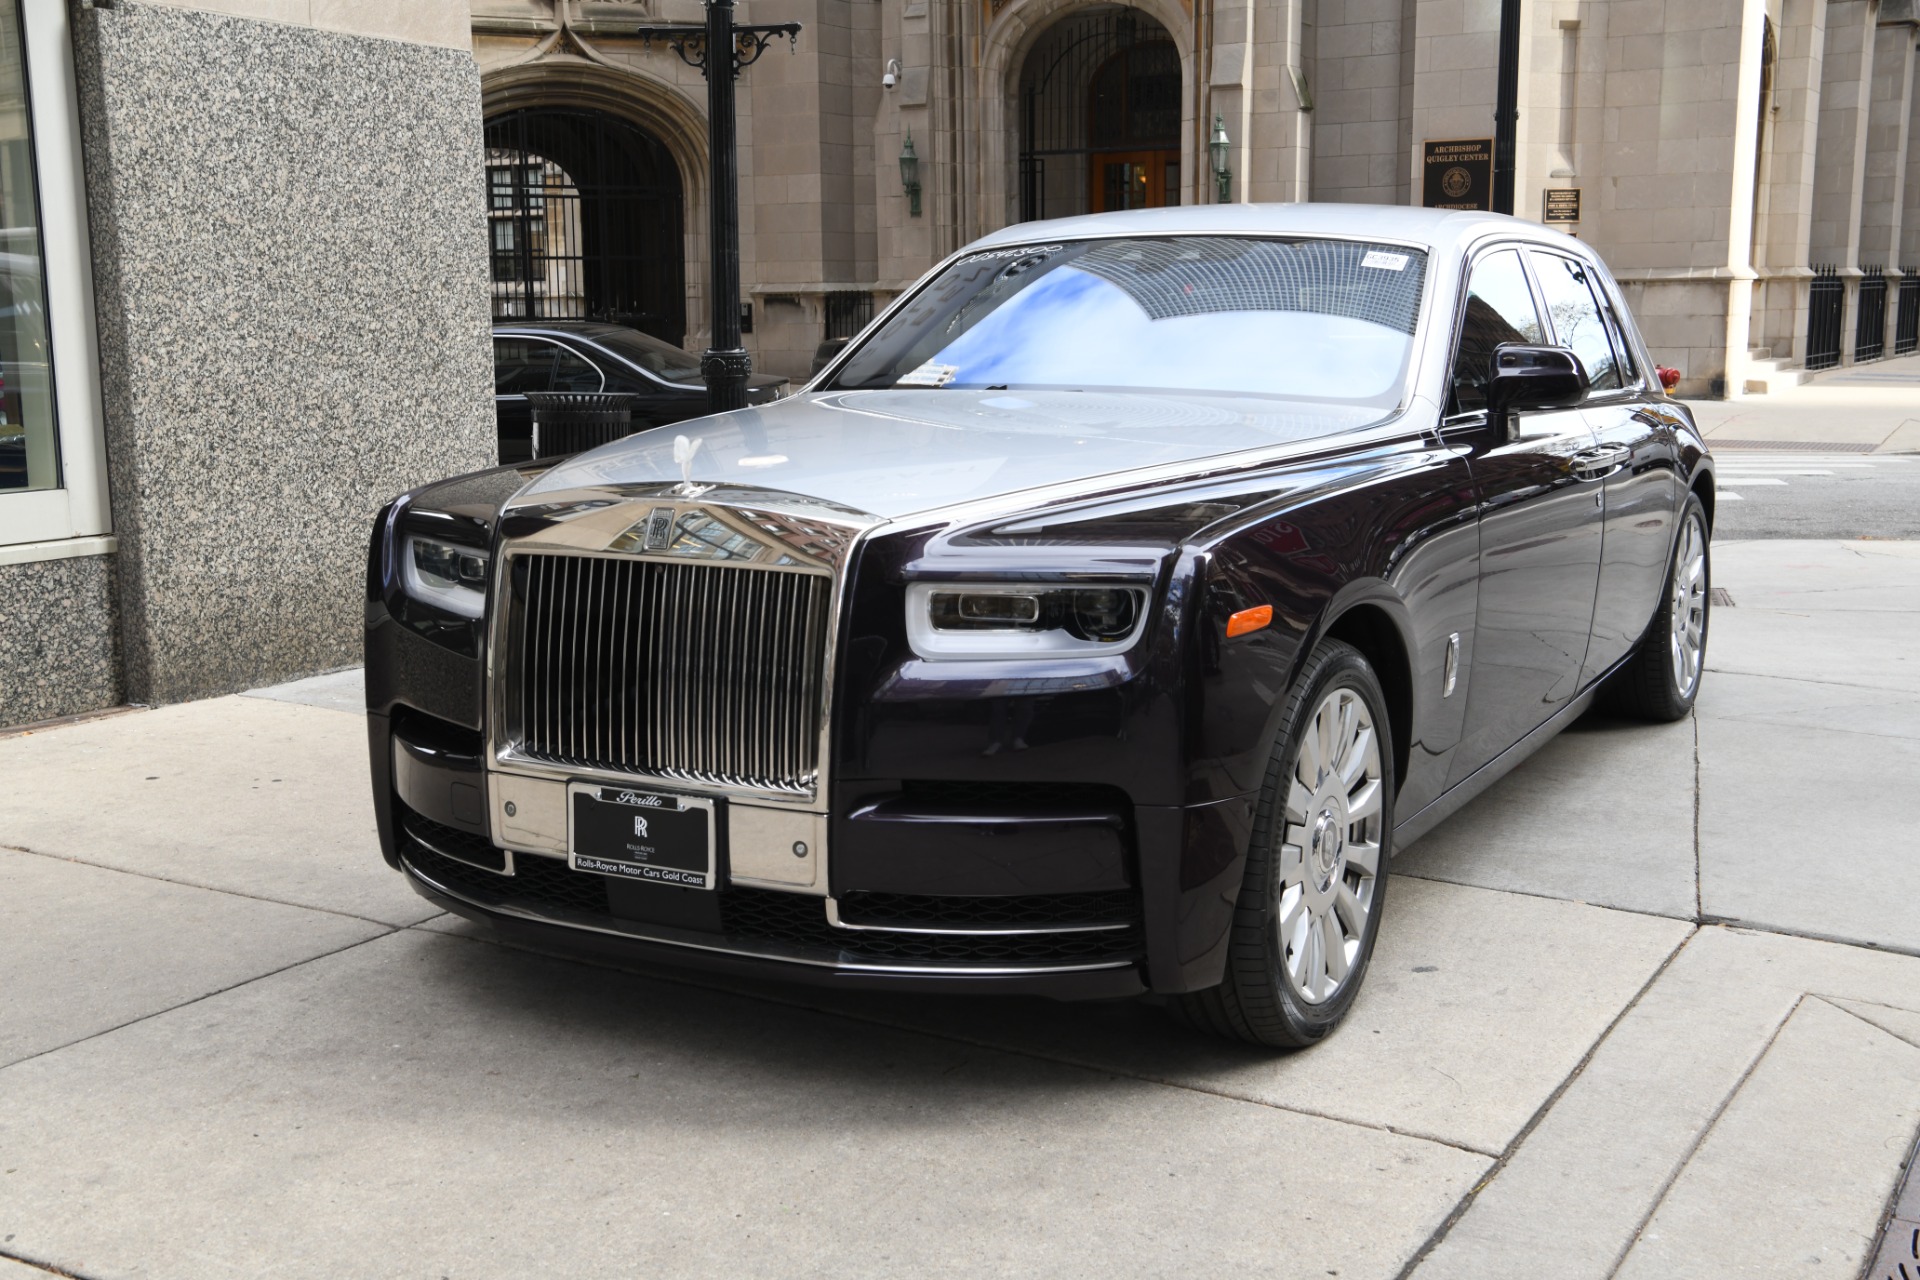 Used 2019 Rolls-Royce Phantom For Sale ($375,000)  Rolls-Royce Motor Cars  Philadelphia Stock #19R101